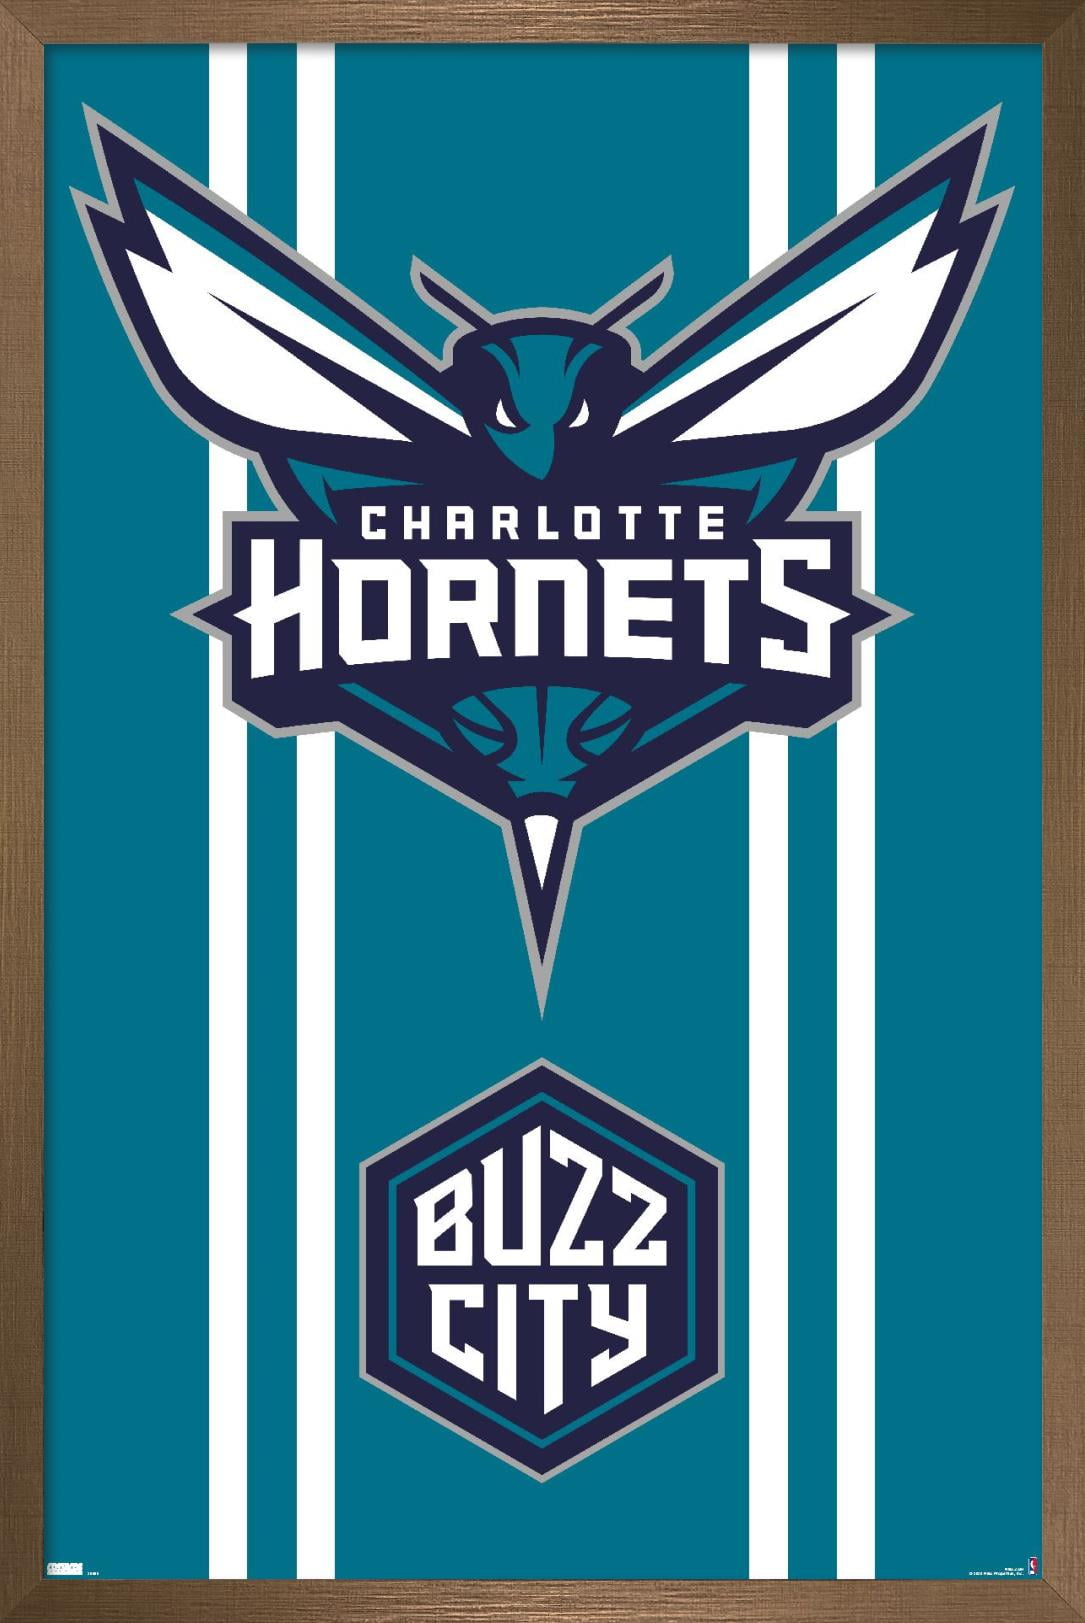 Charlotte hornets logo HD wallpapers